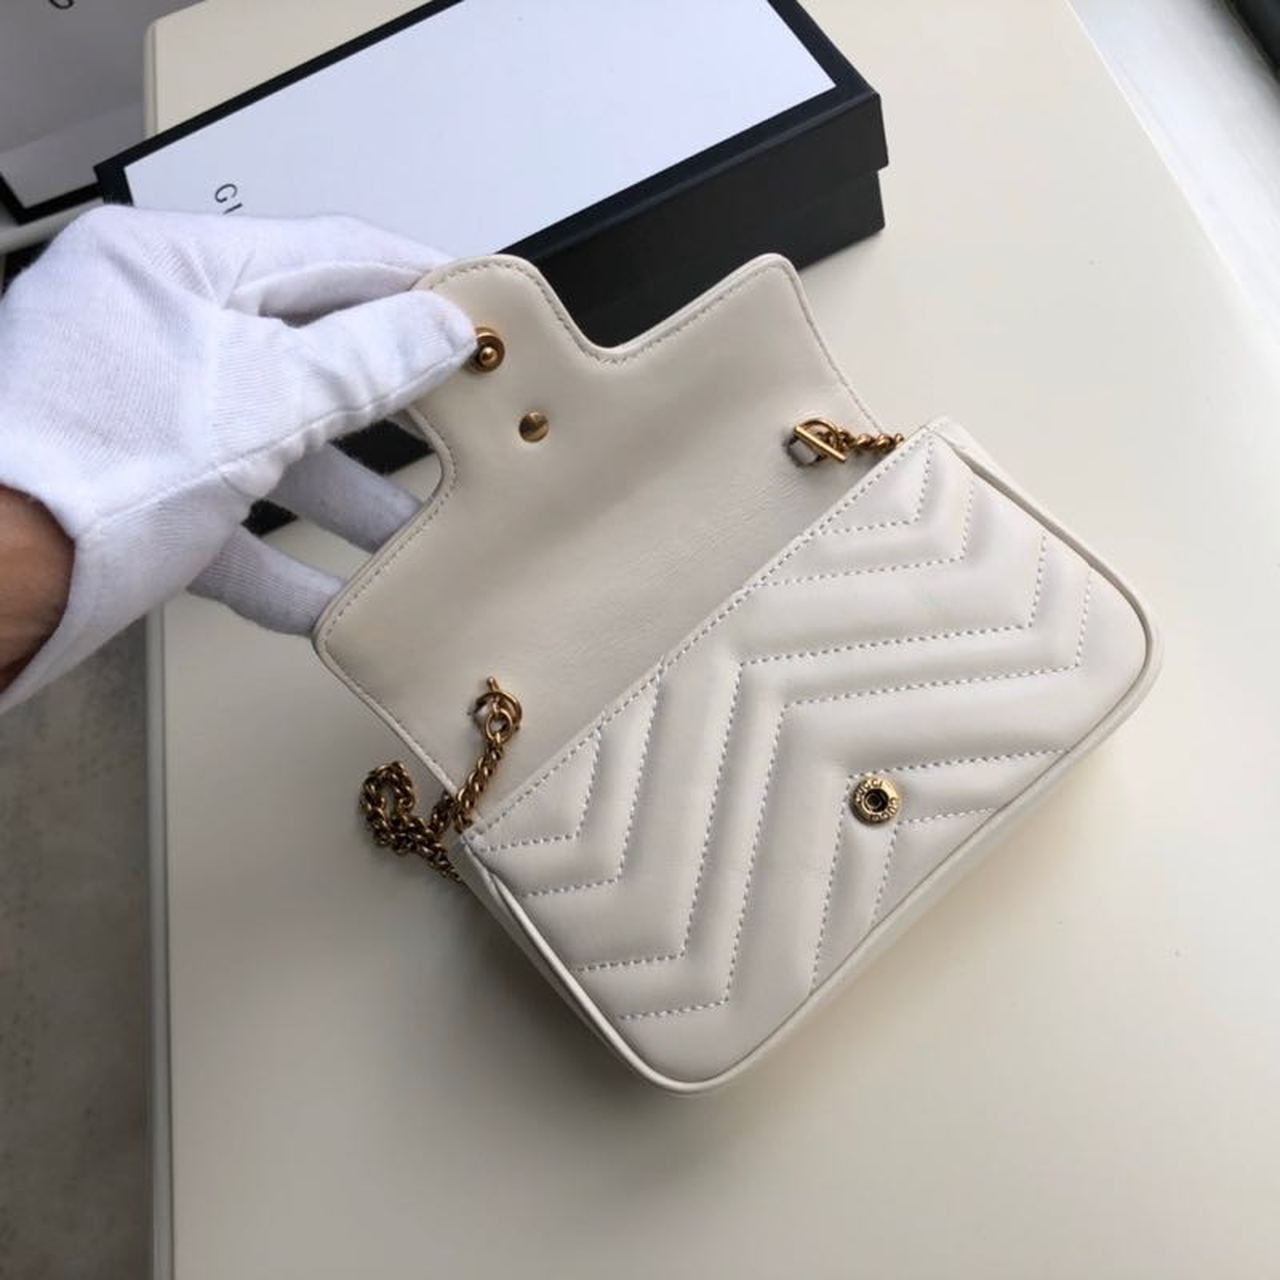 gg Marmont Matelassé Super Mini Bag White Matelassé Chevron For Women 6.2in/16.5cm gg 476433 DTDCT 9022